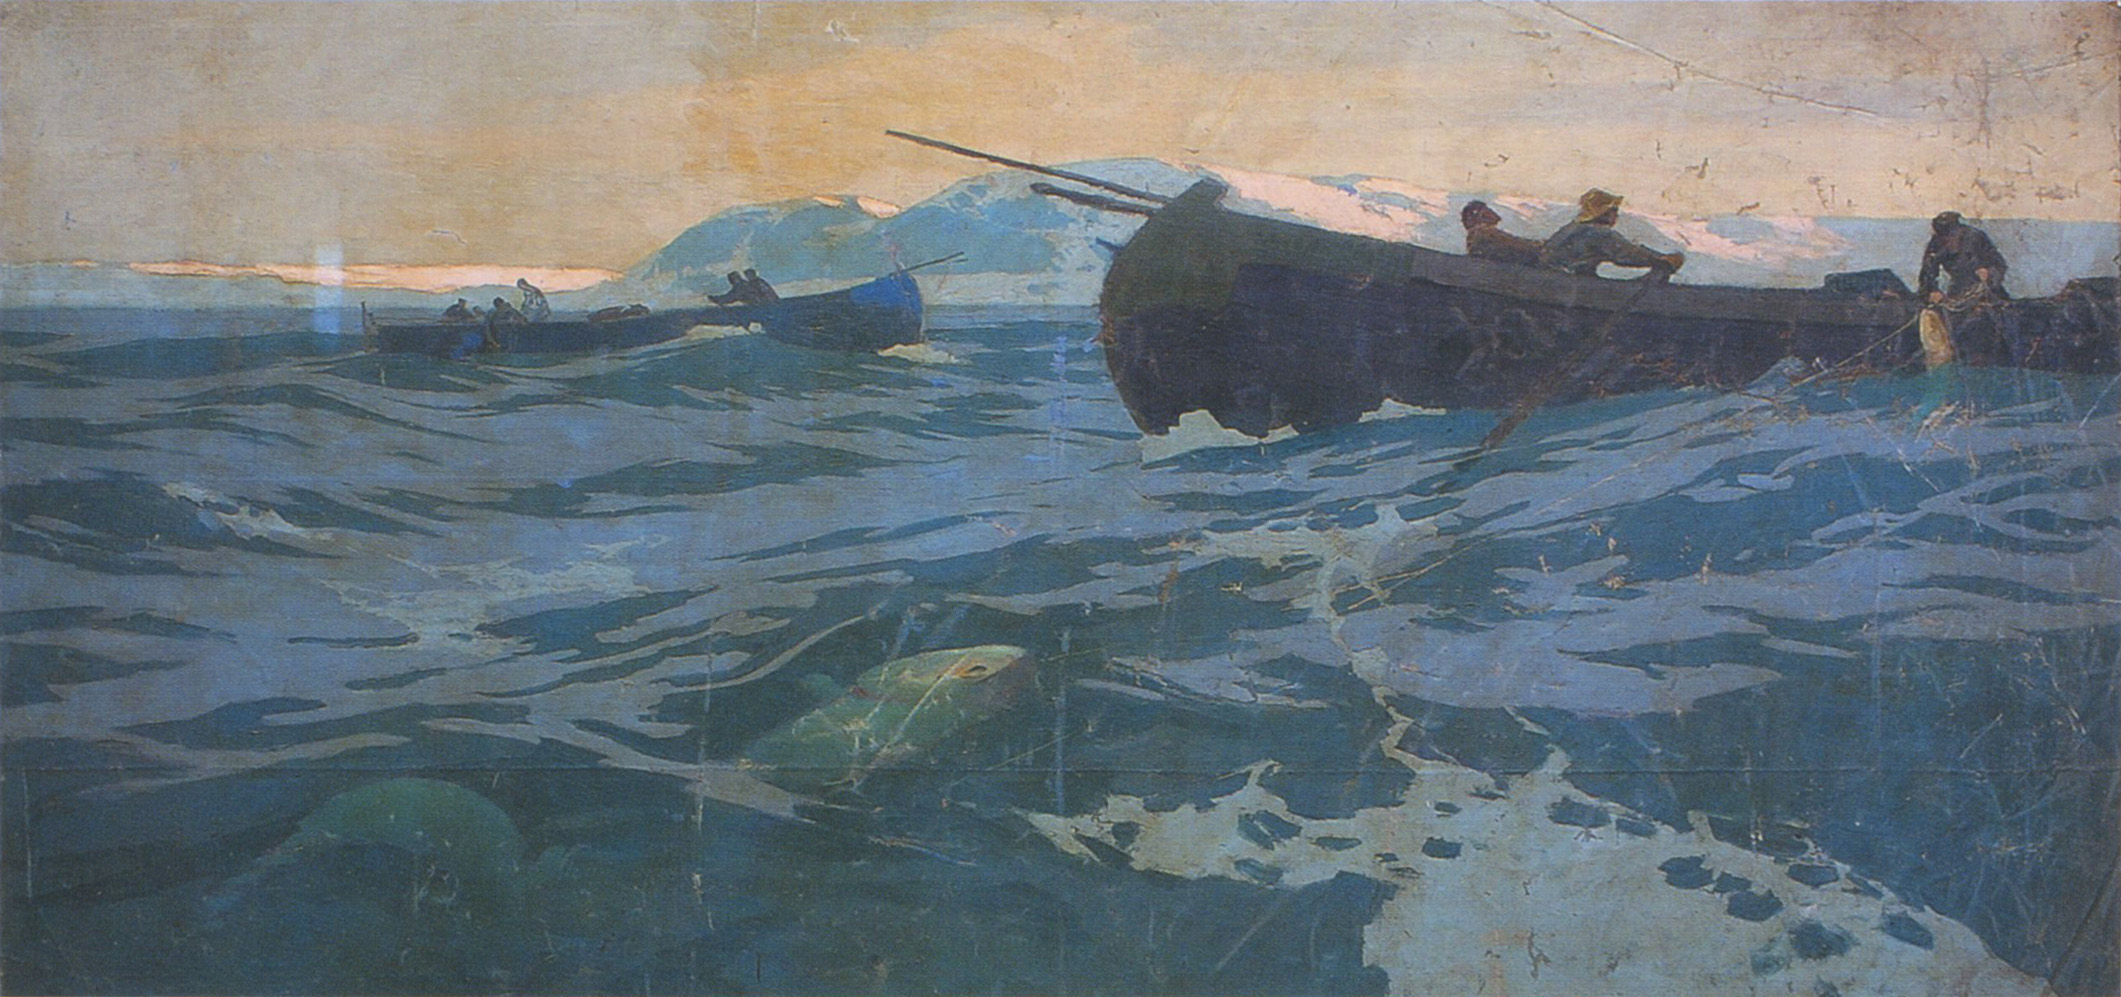 Fishing on Murman sea,1896, by Konstantin Korovin